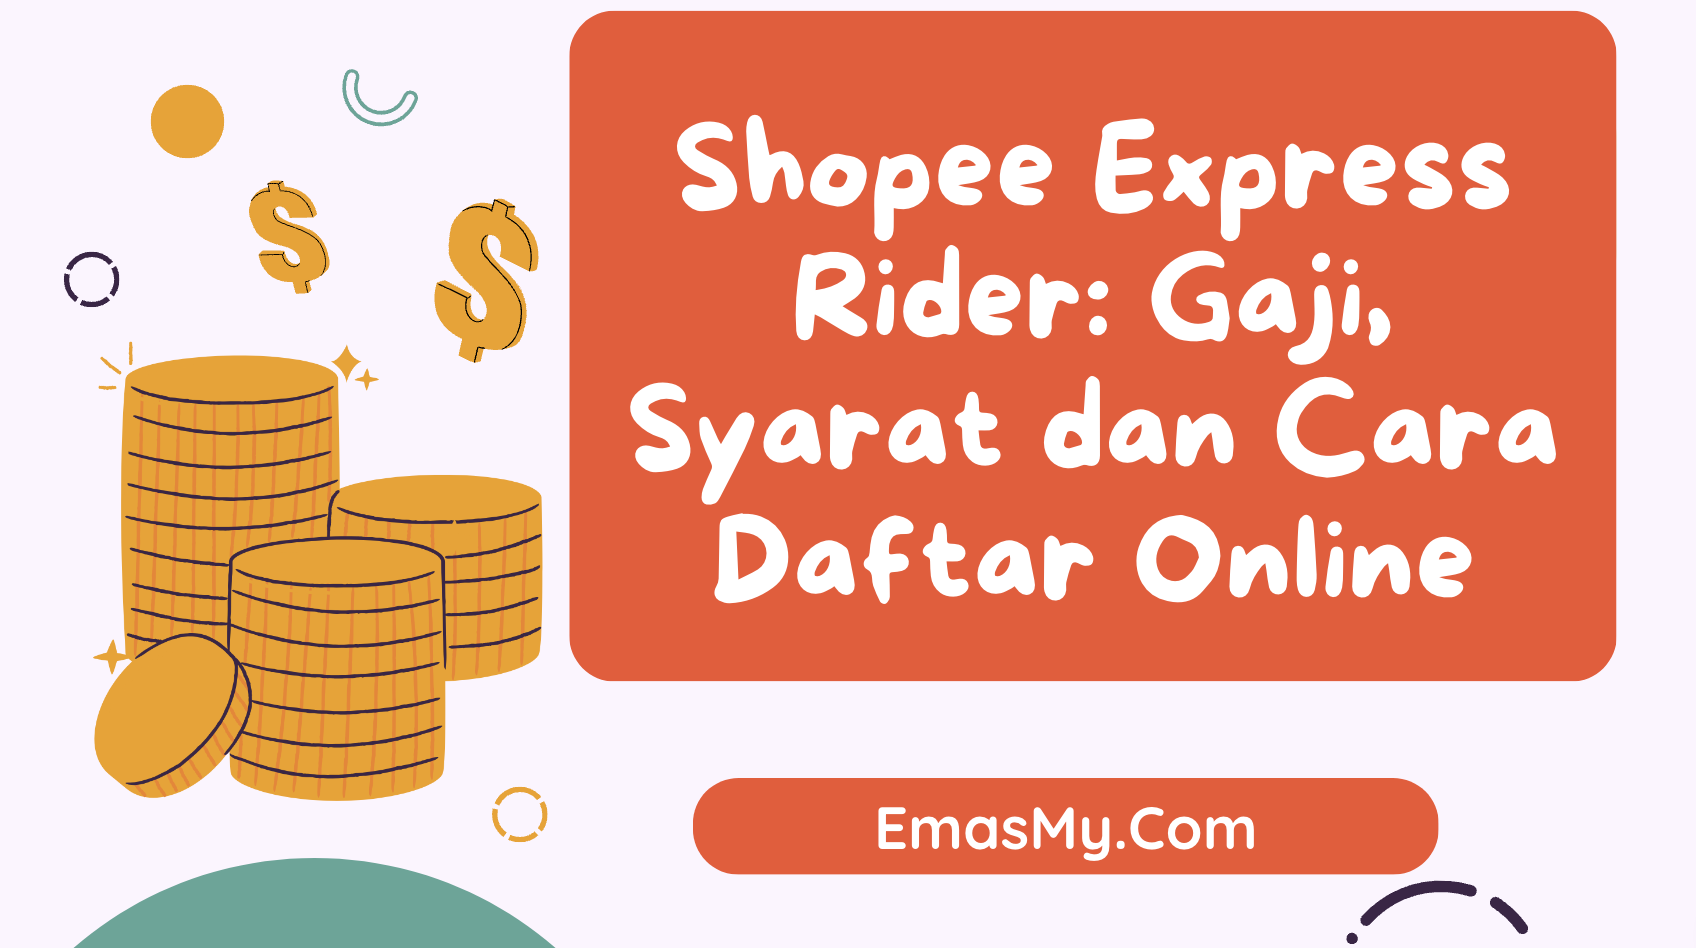 Shopee Express Rider